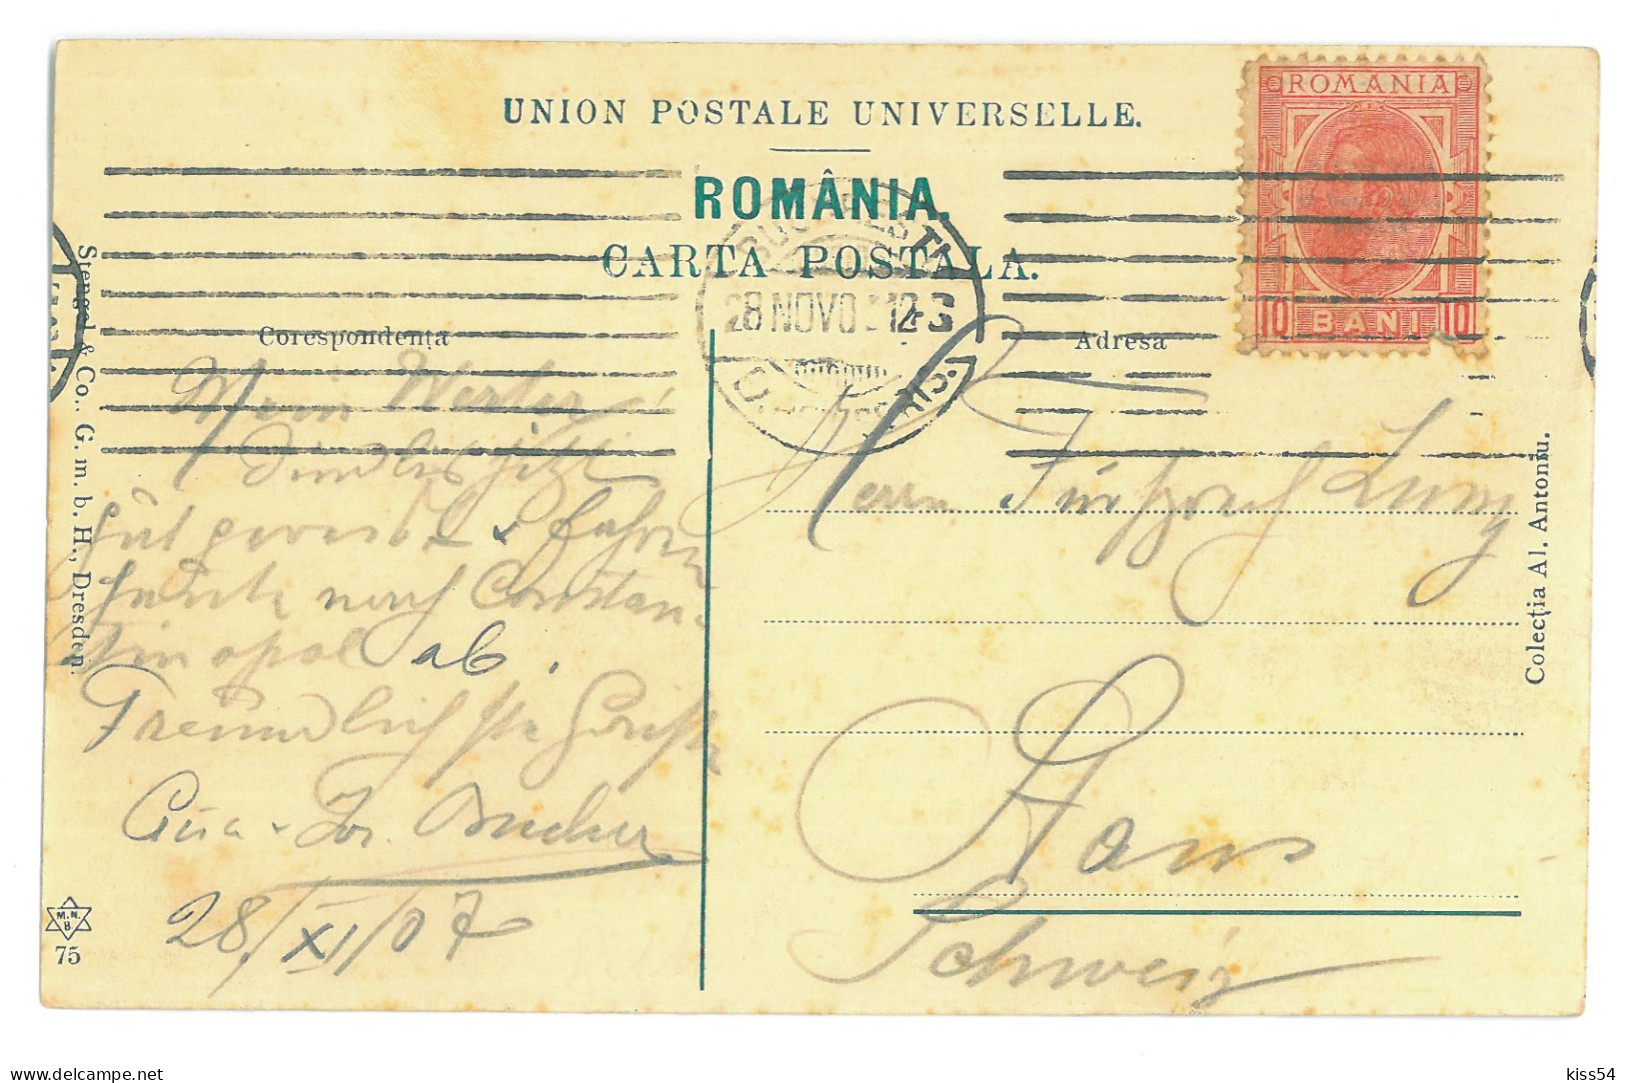 RO 06 - 16258 BUCURESTI, Market, Romania - Old Postcard - Used - 1907 - Romania